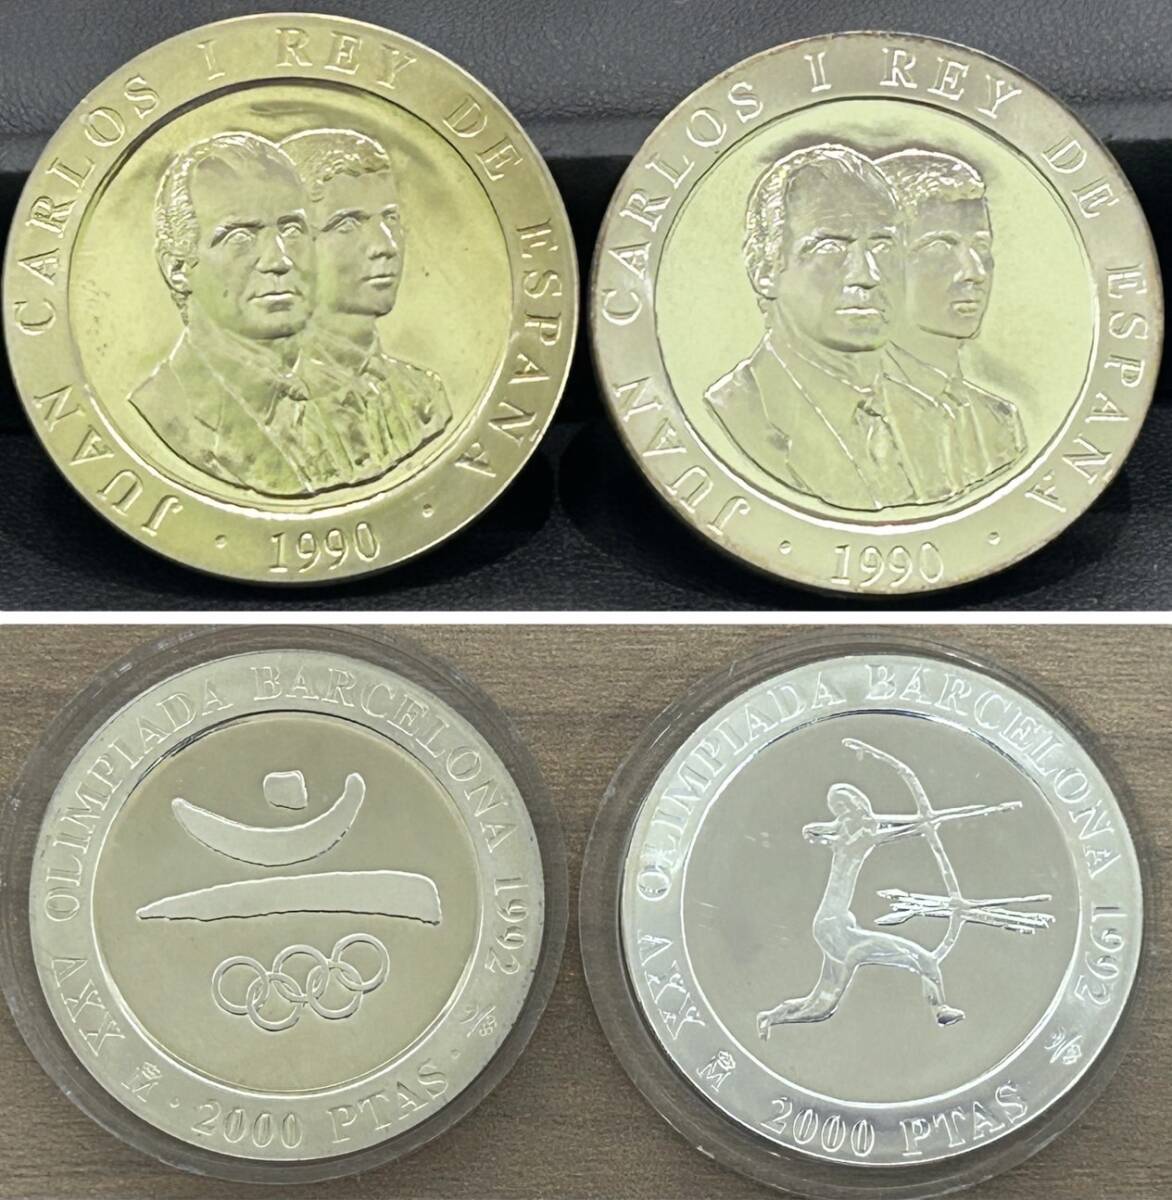 【D2597SS】バルセロナオリンピック プルーフ銀貨 2枚セット 1992 2000PTAS ペセタ 大会ロゴ マーク アーチェリー スペイン ケース付の画像1